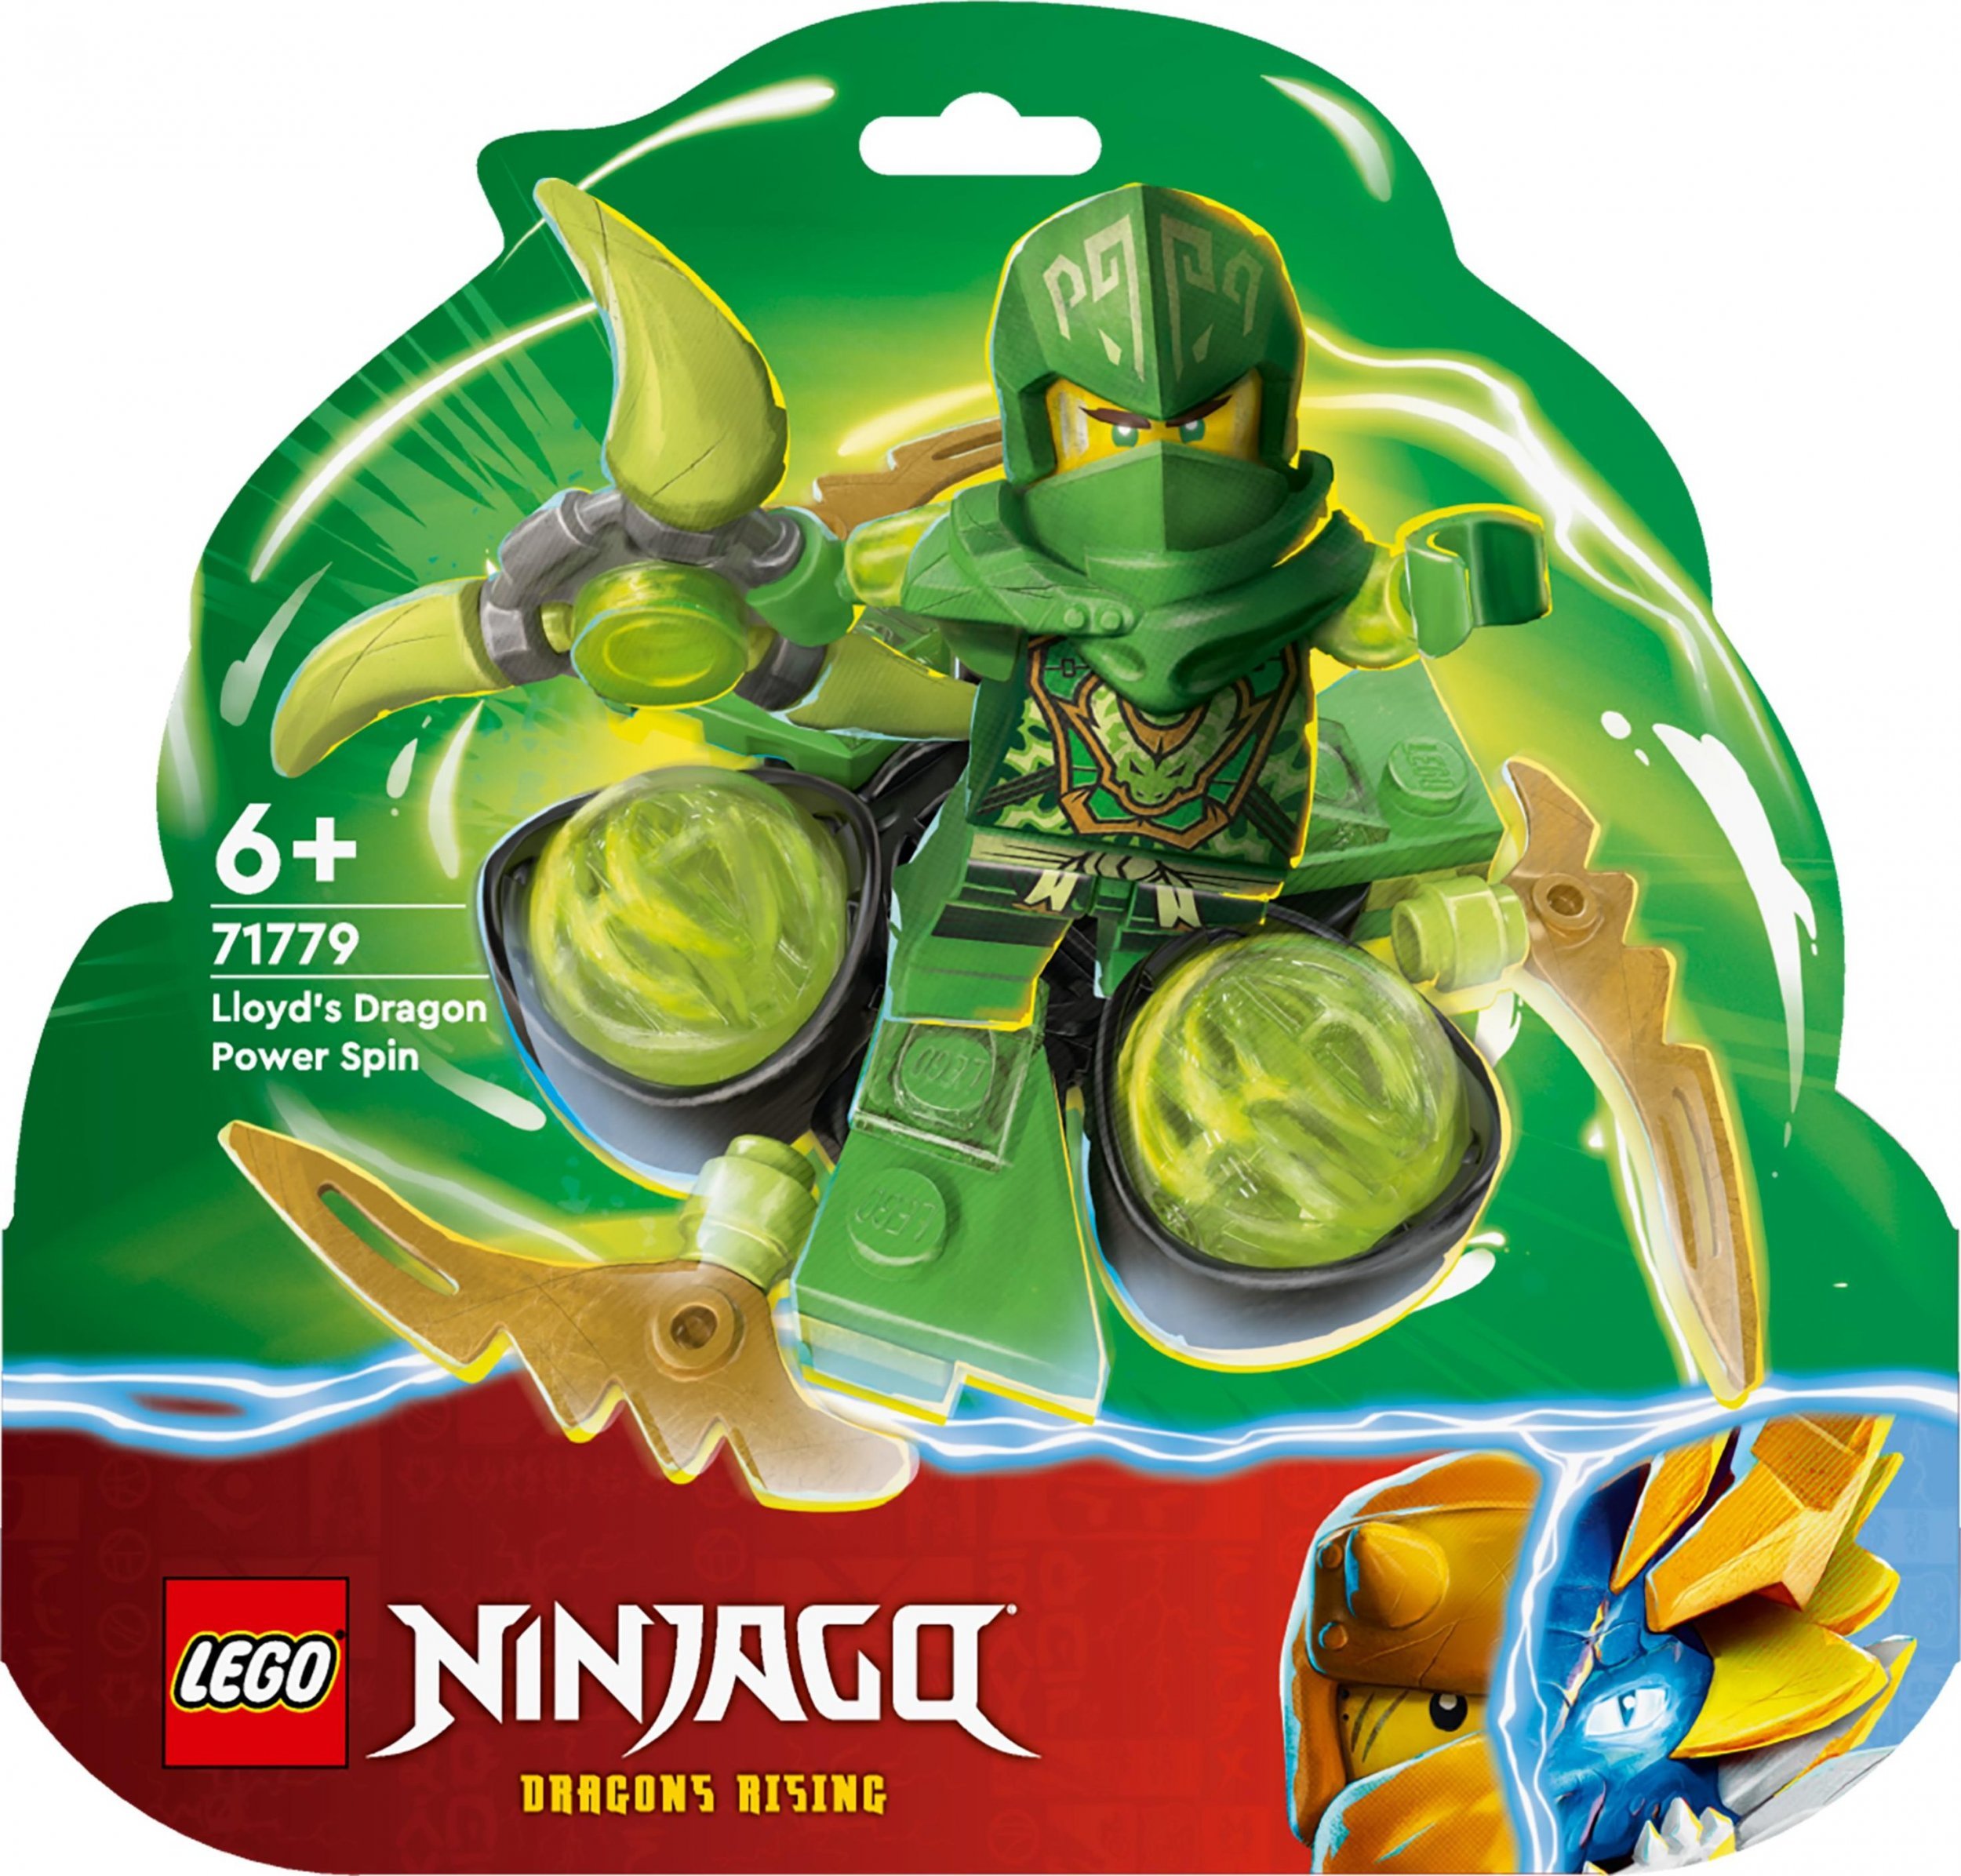 LEGO Ninjago Puterea dragonului lui Lloyd Spinjitzu Spin (71779)